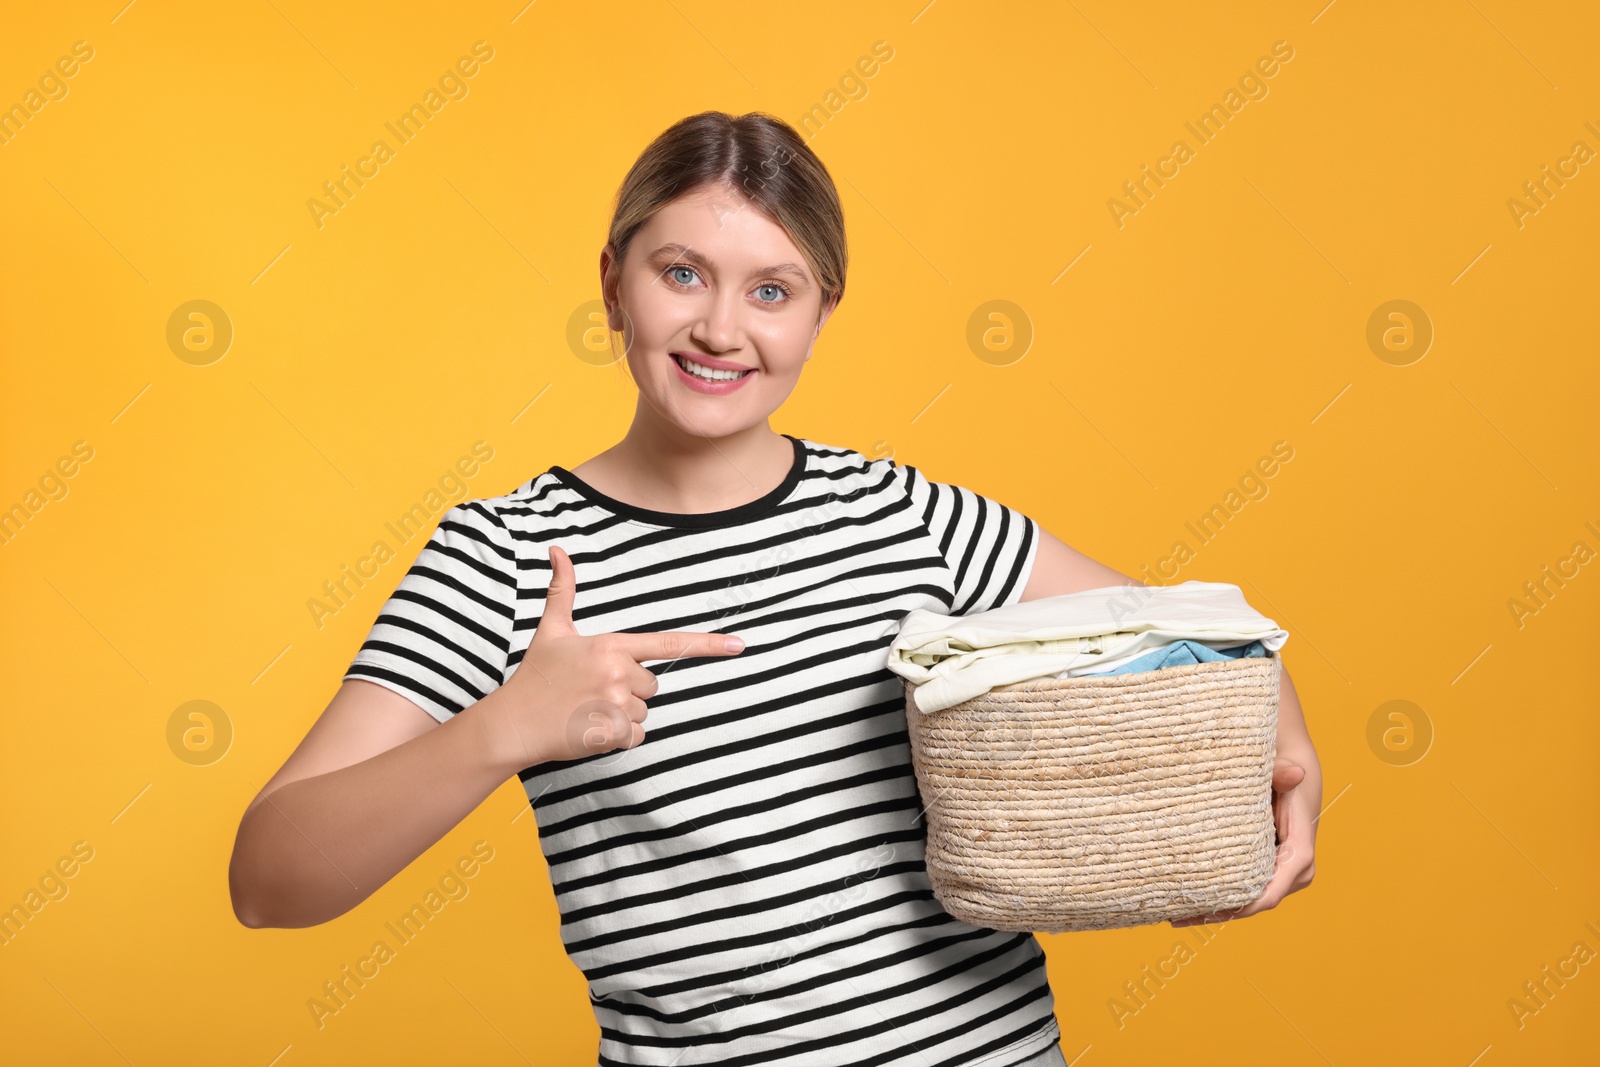 Photo of Happy woman with basket full of laundry on orange background